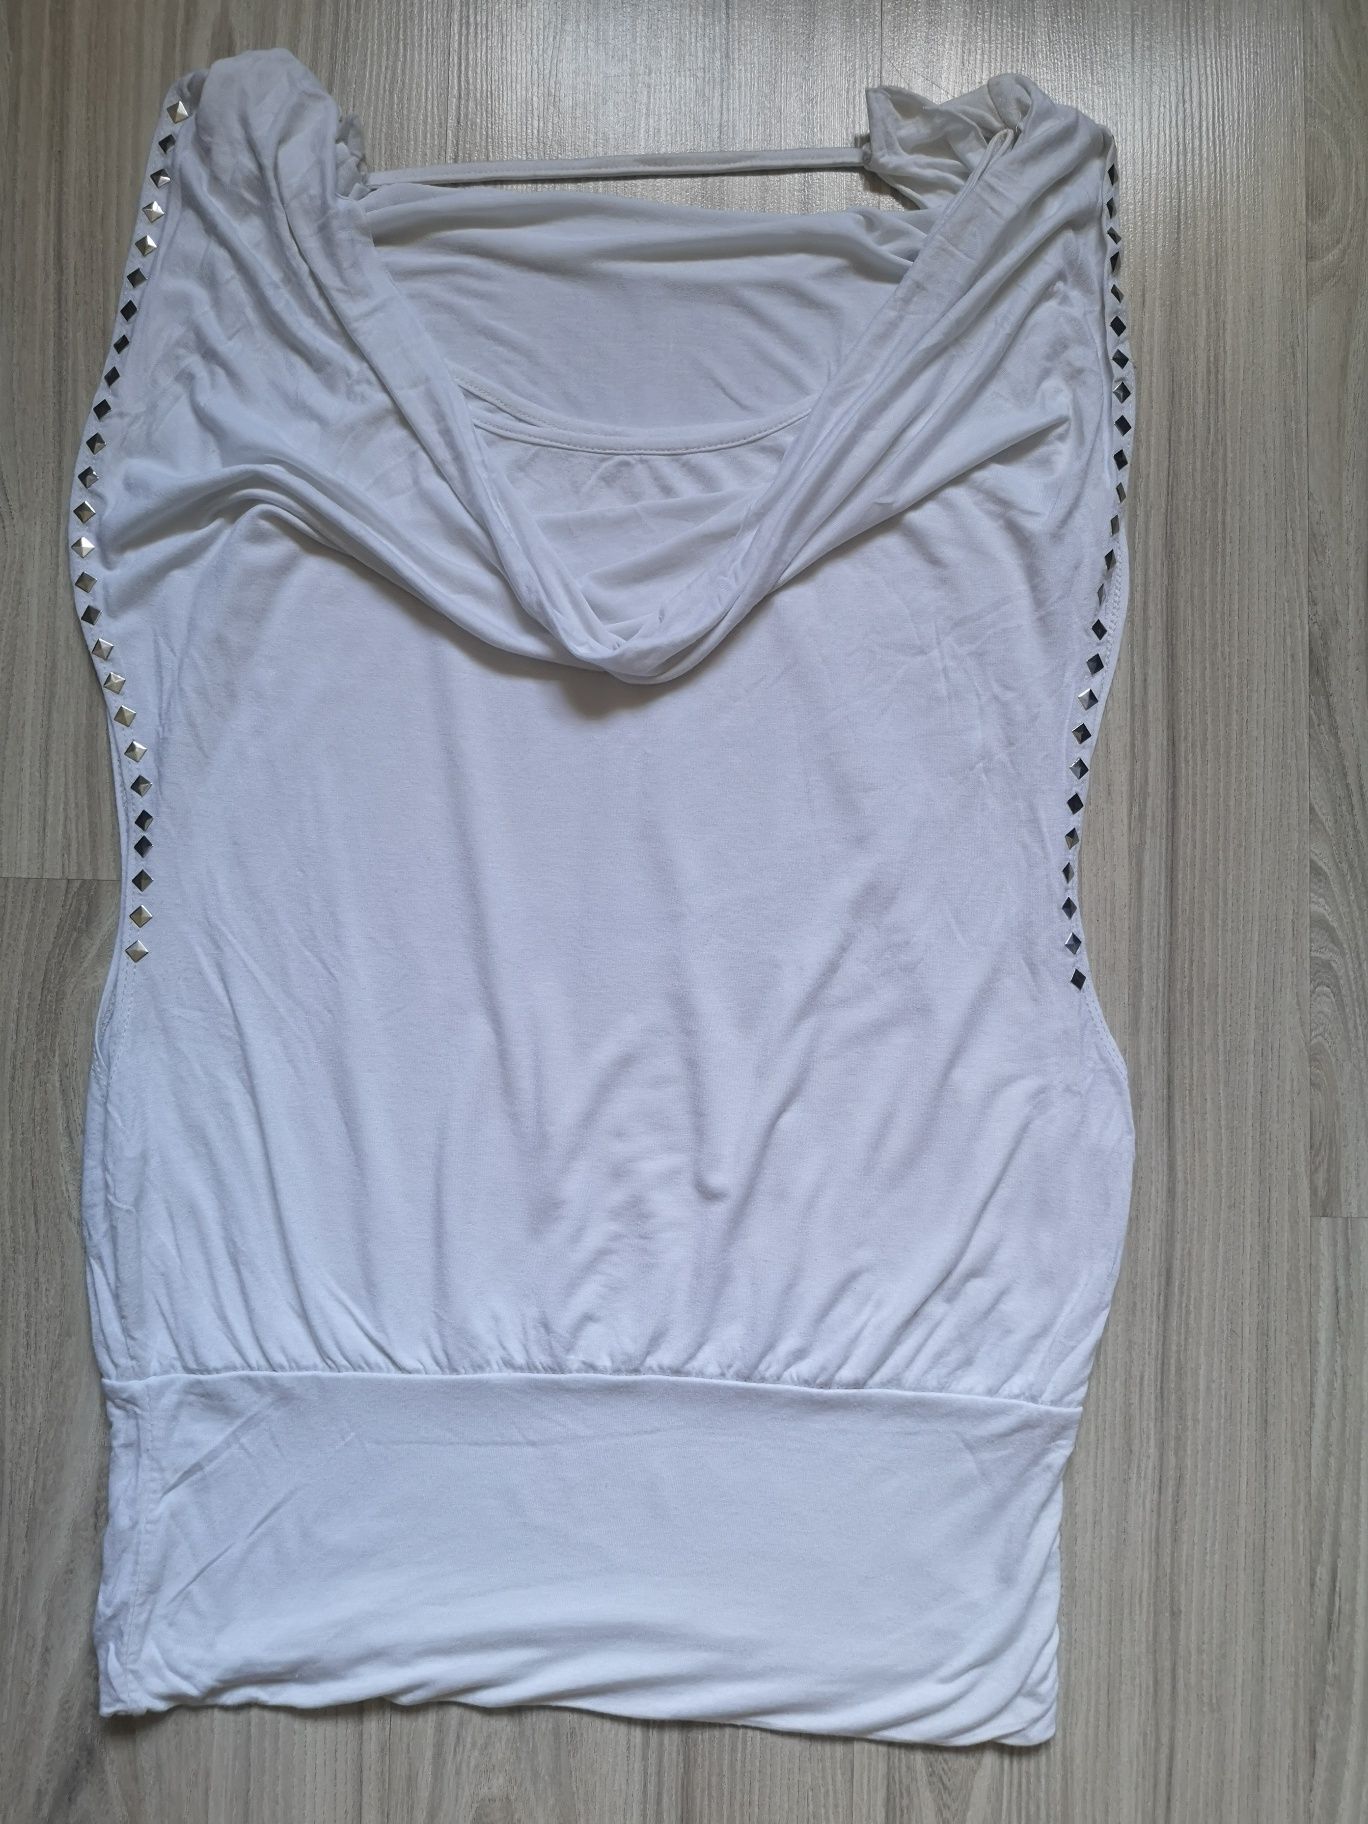 Damska biała bluzka tunika rozmiar S/M